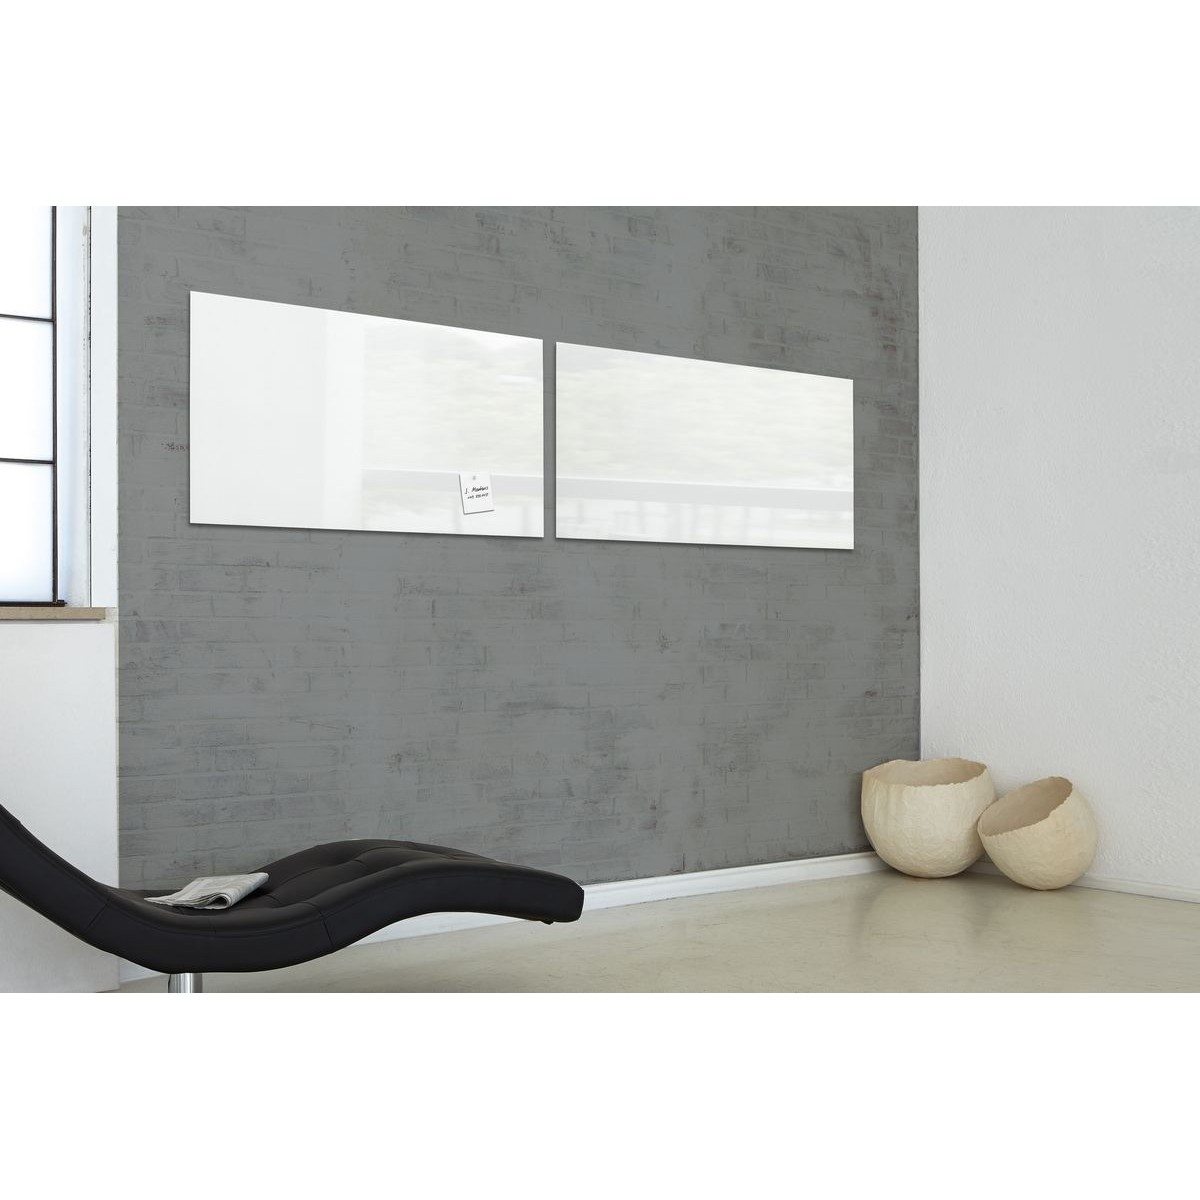 GL146 - Sigel - Lavagna Magnetica - Super Bianco - 91 x 46 cm 